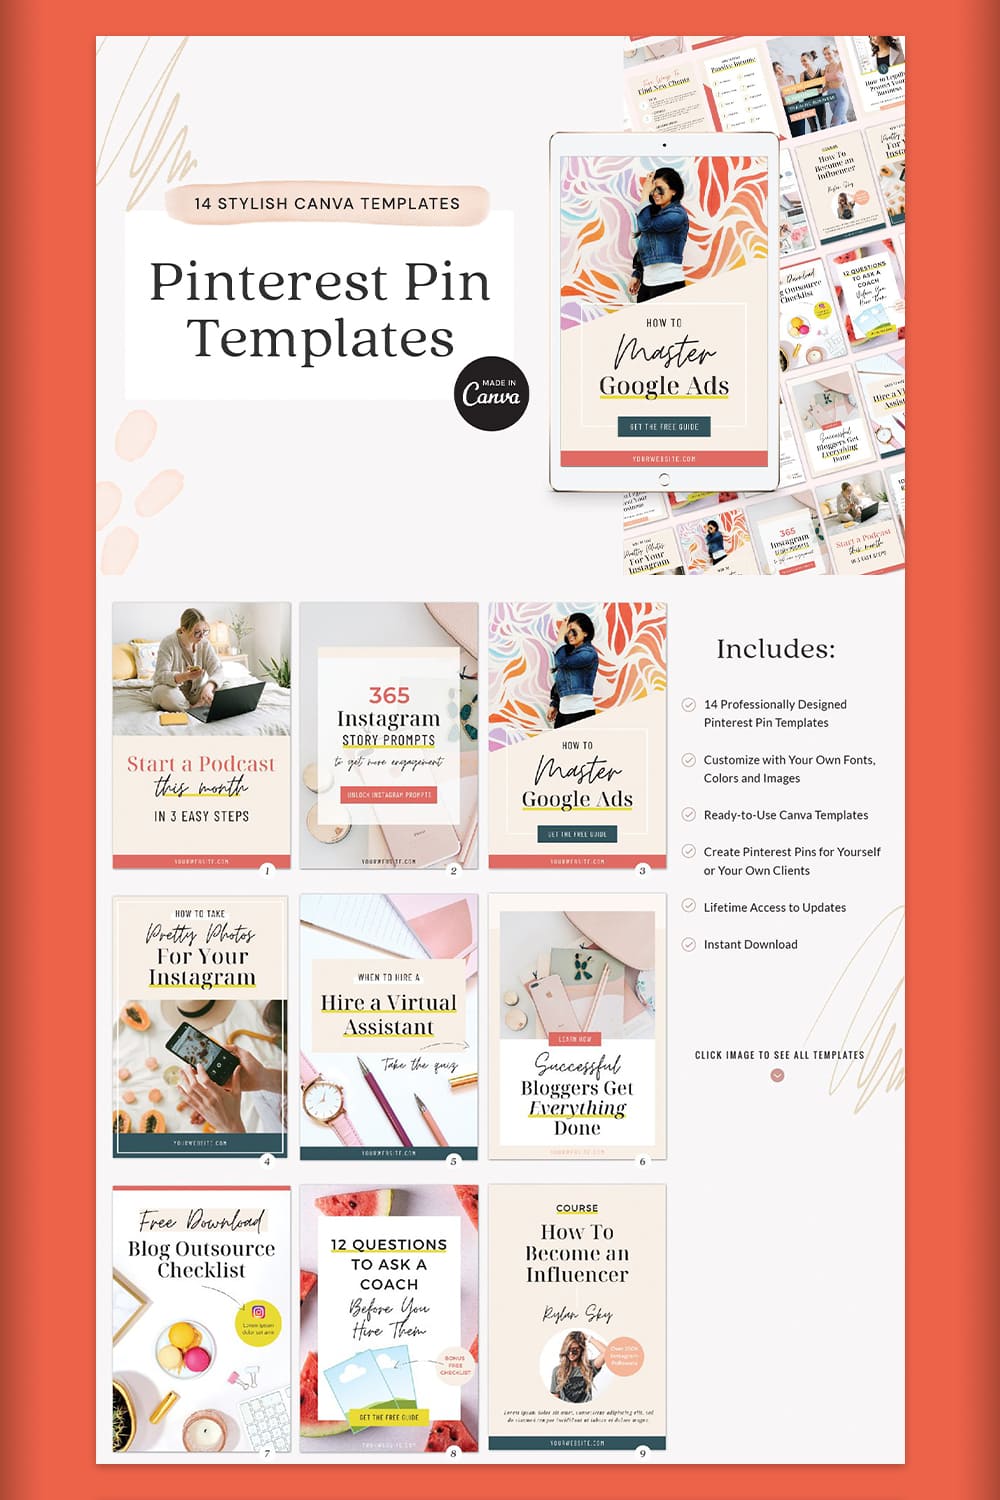 Pinterest - Pinterest Pin Template for Canva.